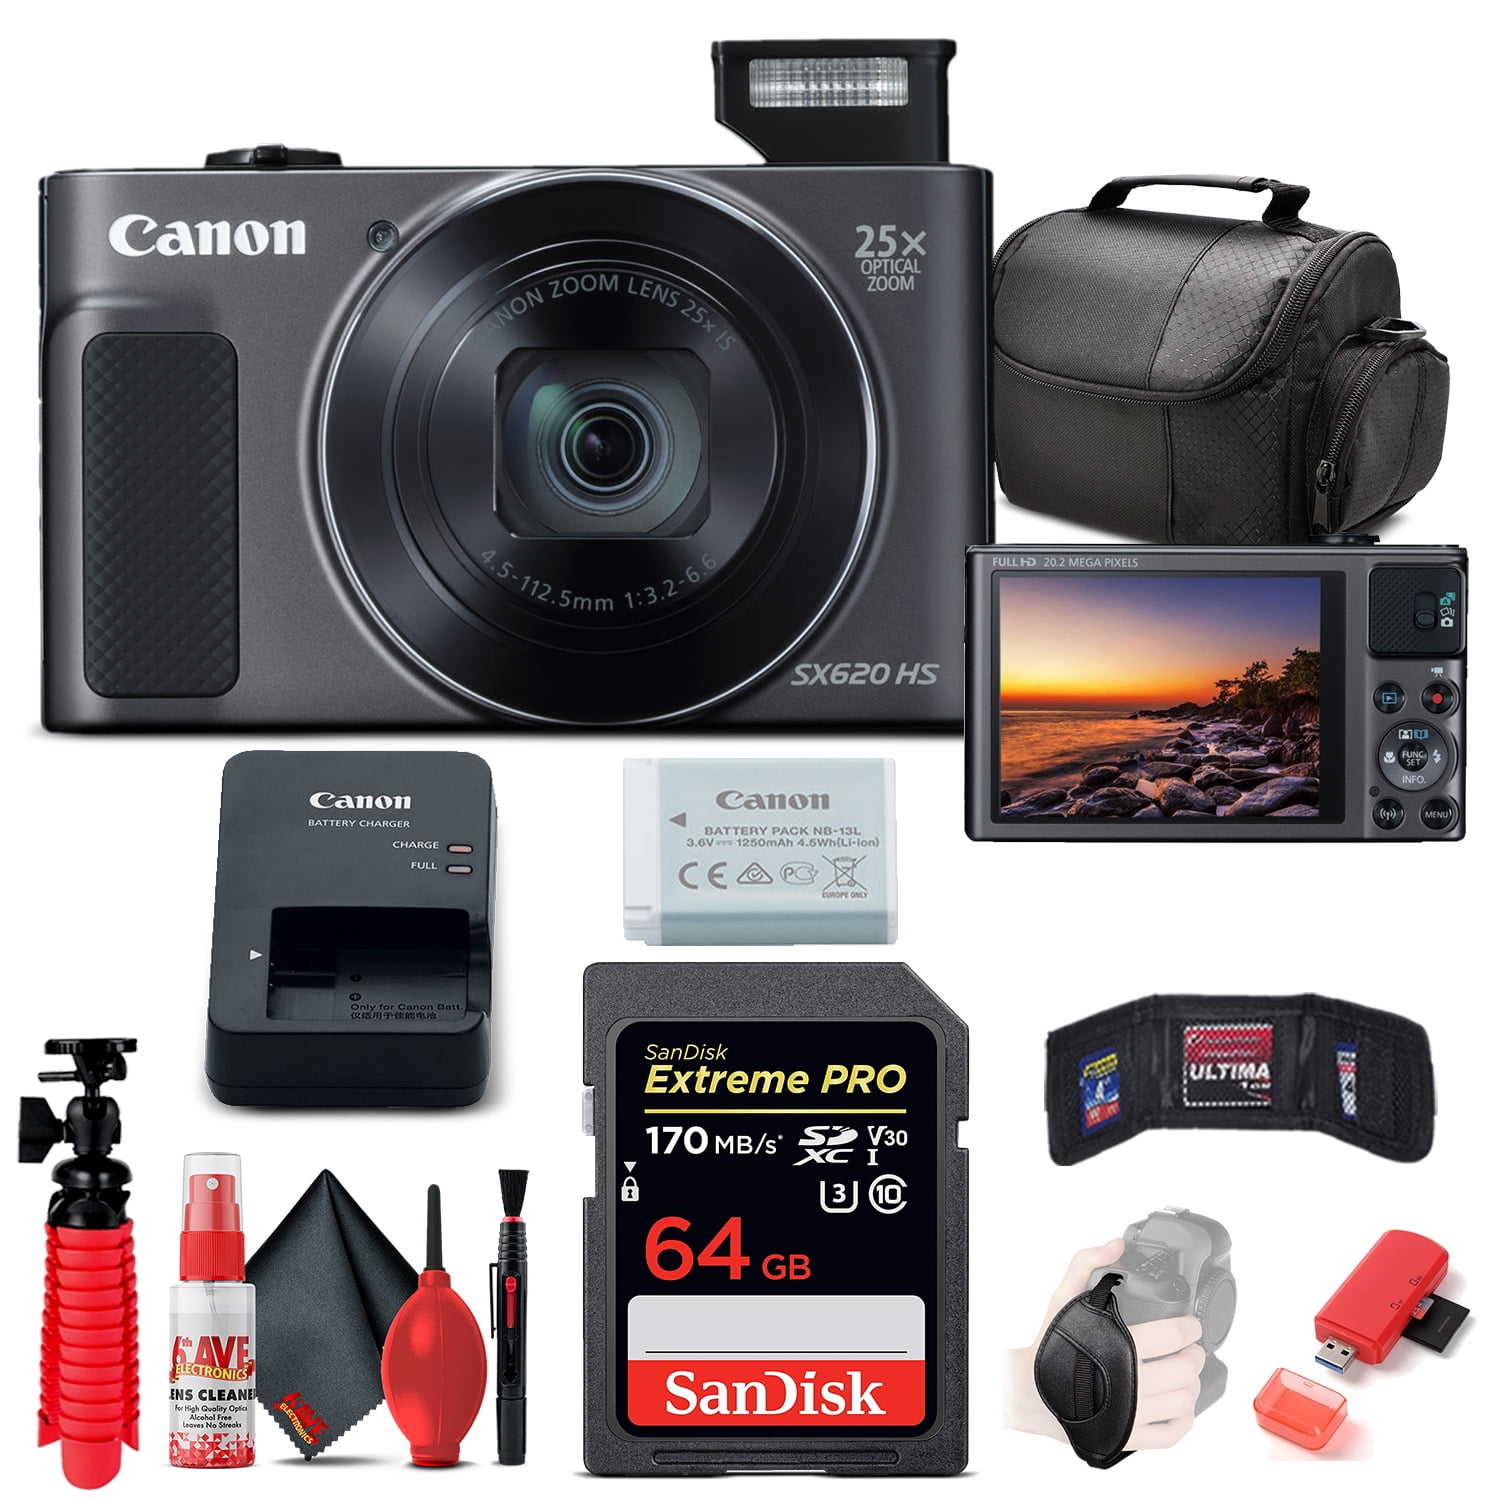 Canon PowerShot SX620 HS Digital Camera (Black) (1072C001) + 64GB